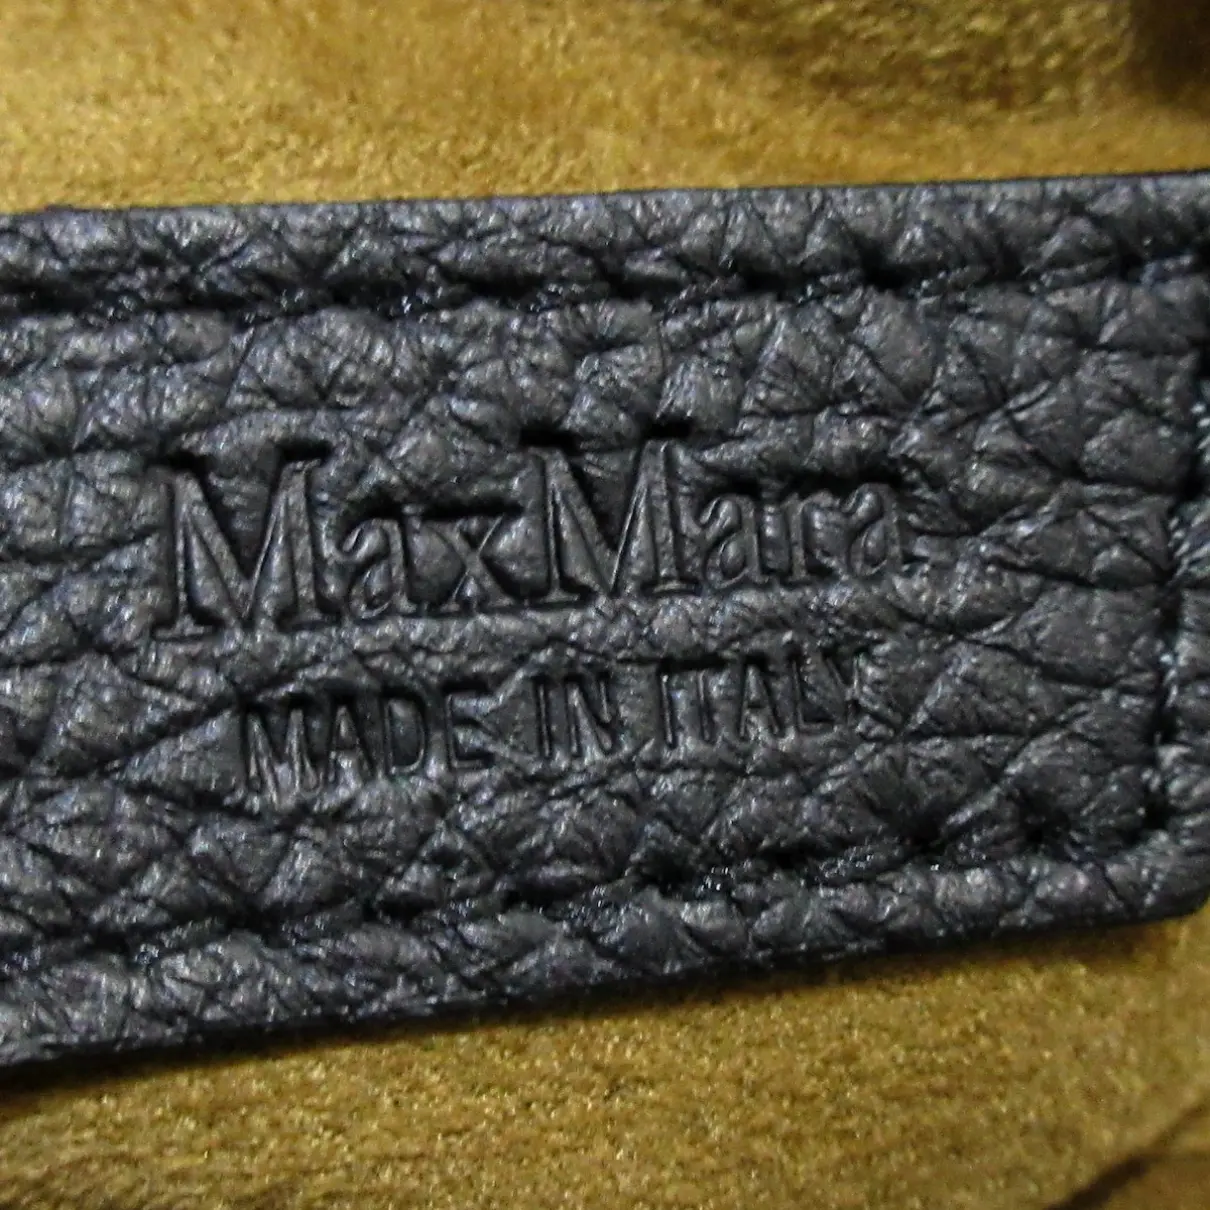 Wool clutch bag Max Mara